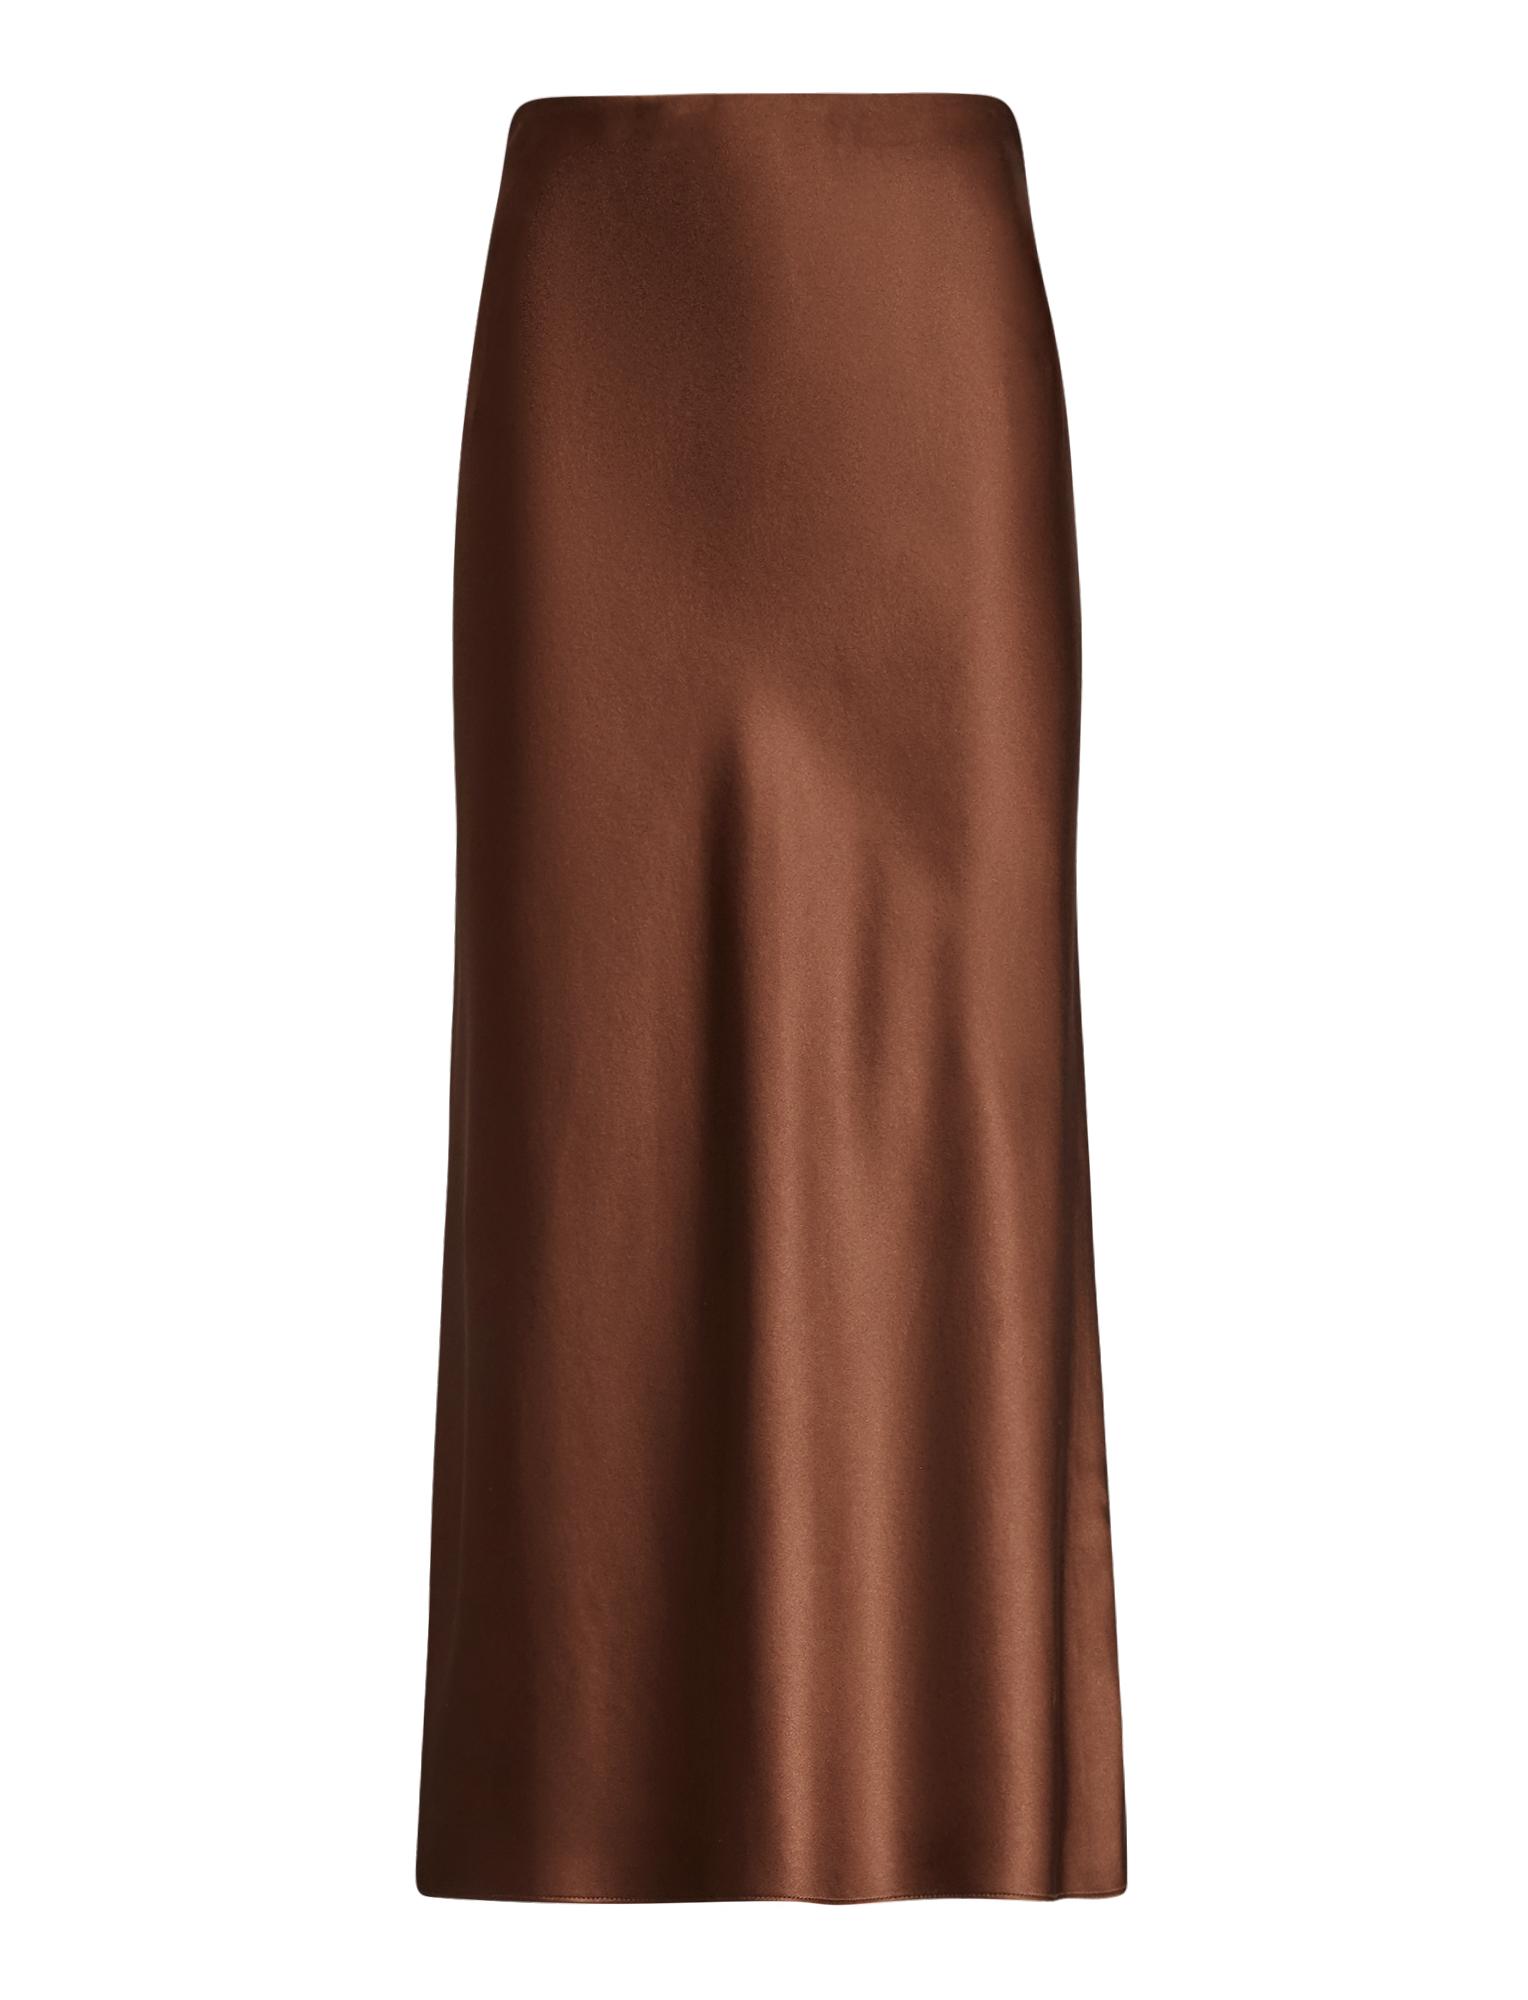 JOSEPH Frances Silk Satin Skirt in Brown - Lyst